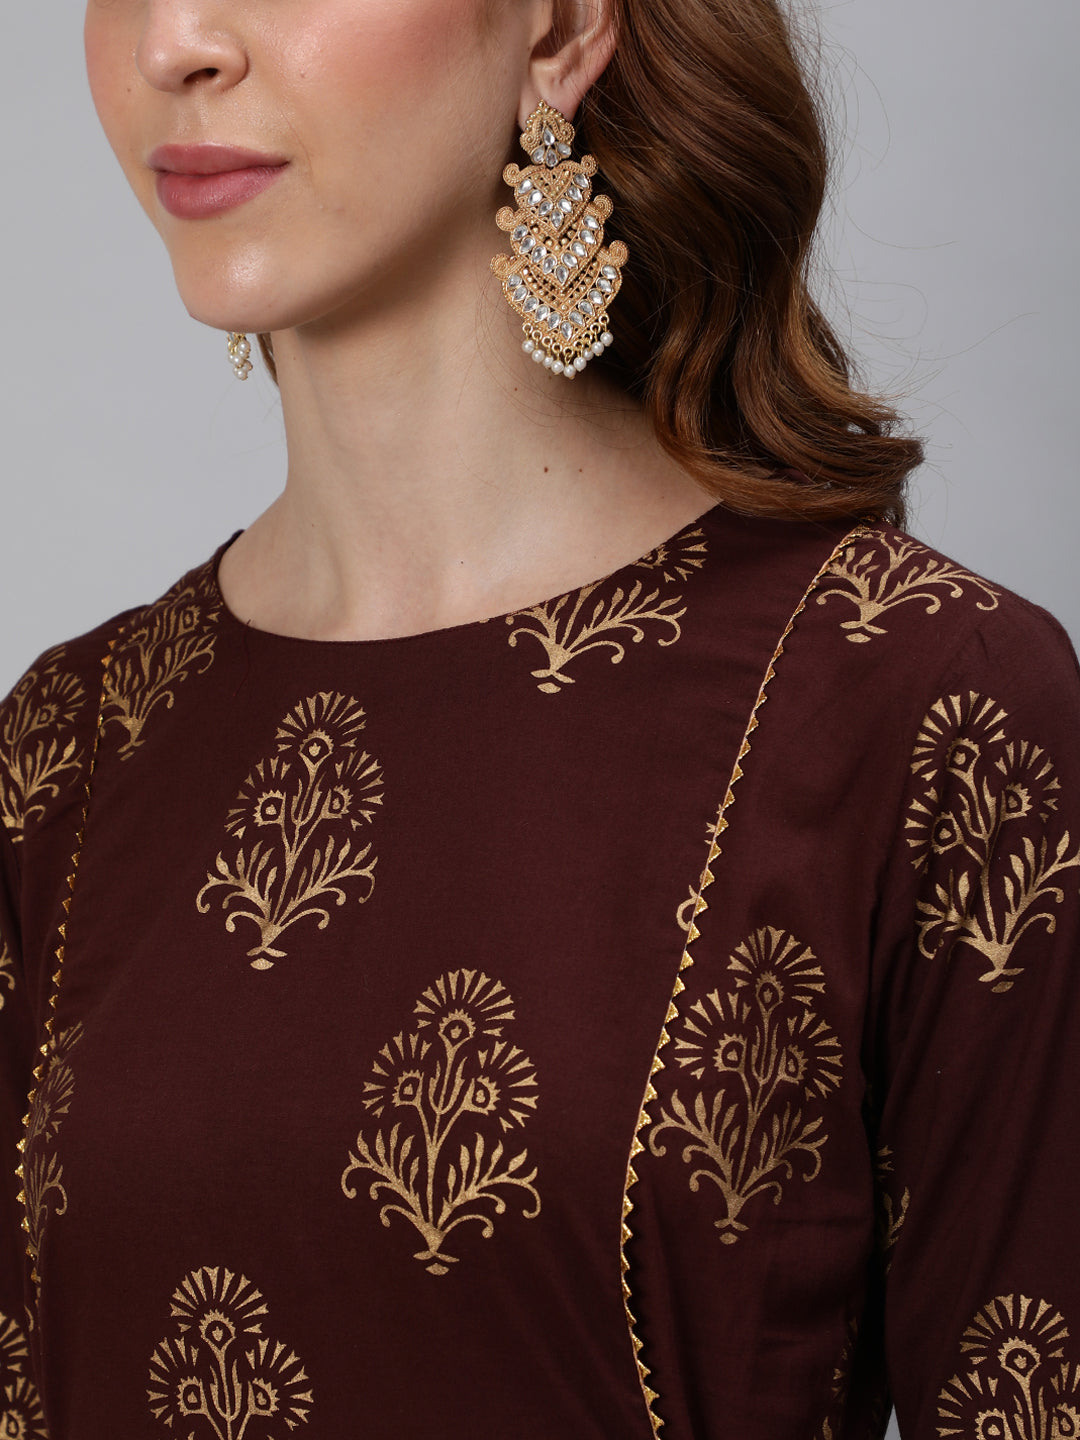 Ishin Women's Brown Embroidered Anarkali Kurta With Trouser